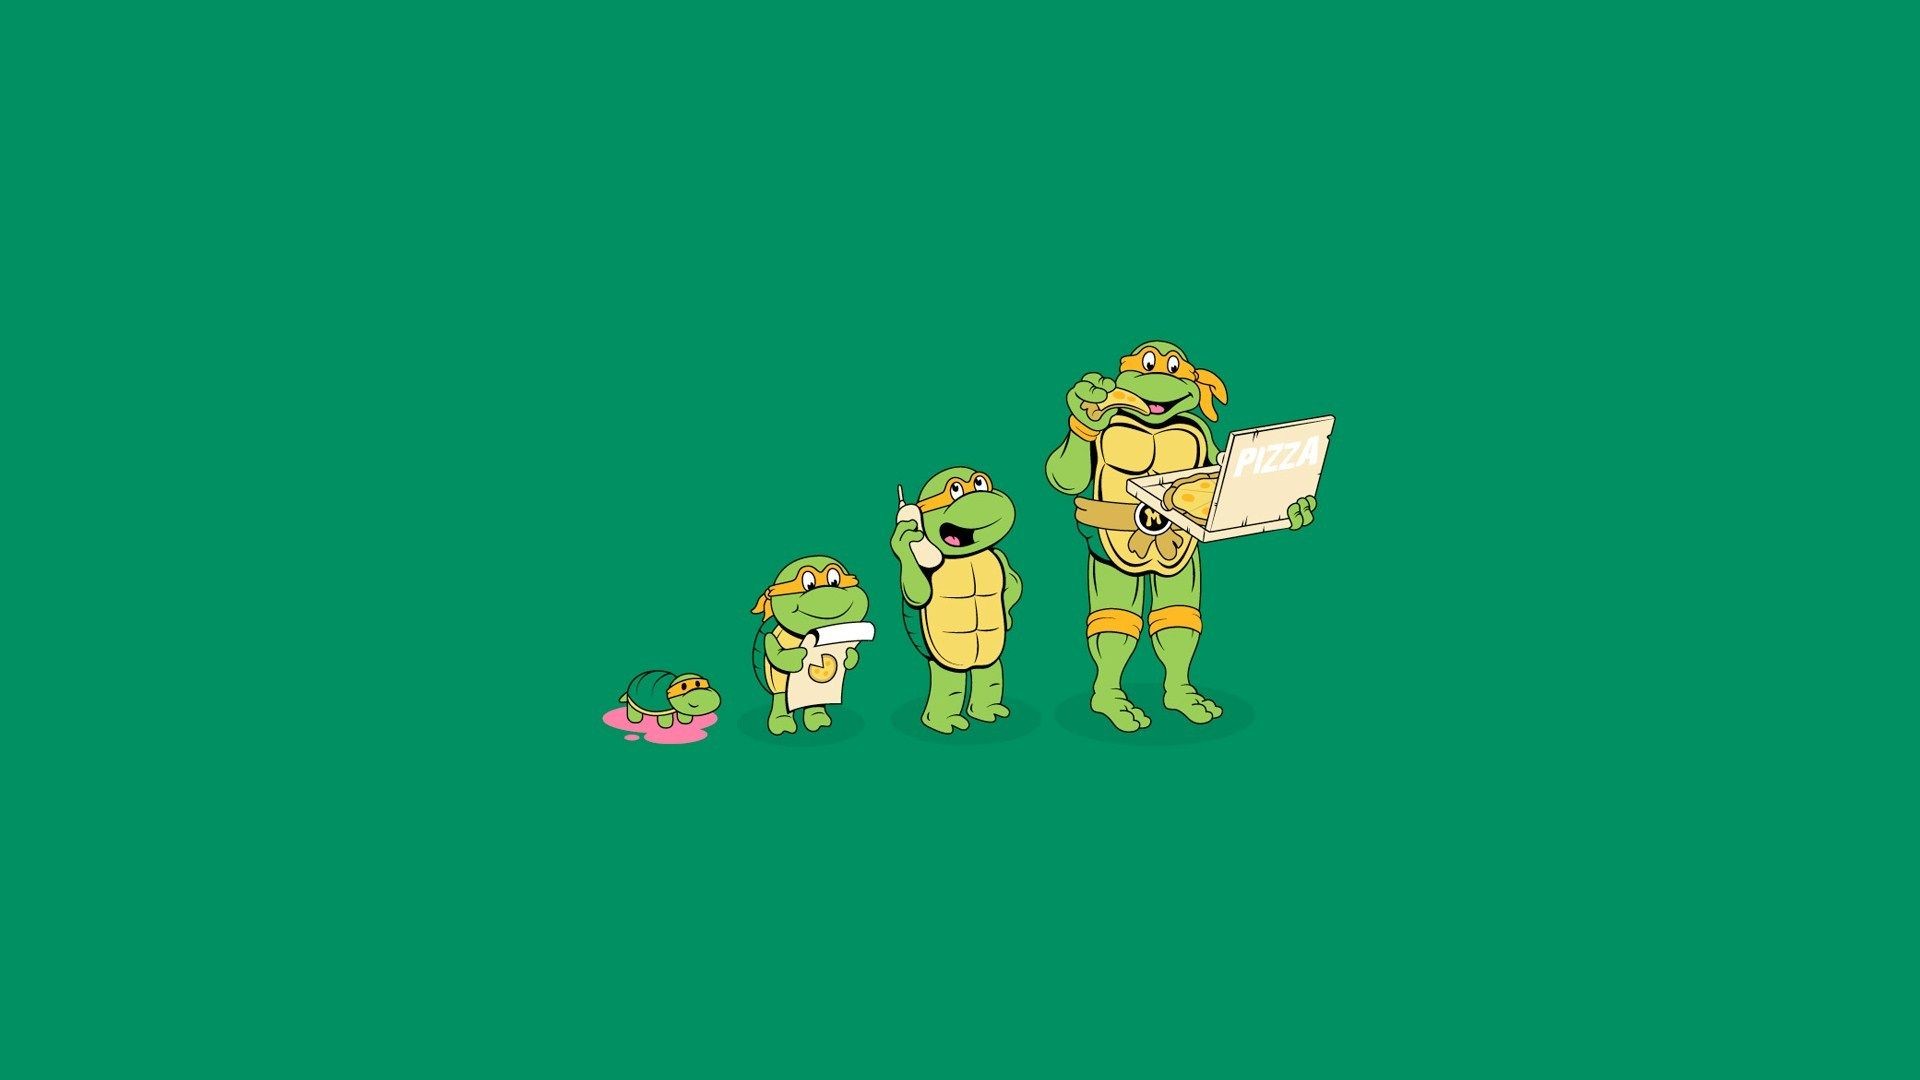 1920x1080 ninja turtles wallpaper tumblr: Yandex.GÃ¶rsel'de 26 bin gÃ¶rsel bulundu